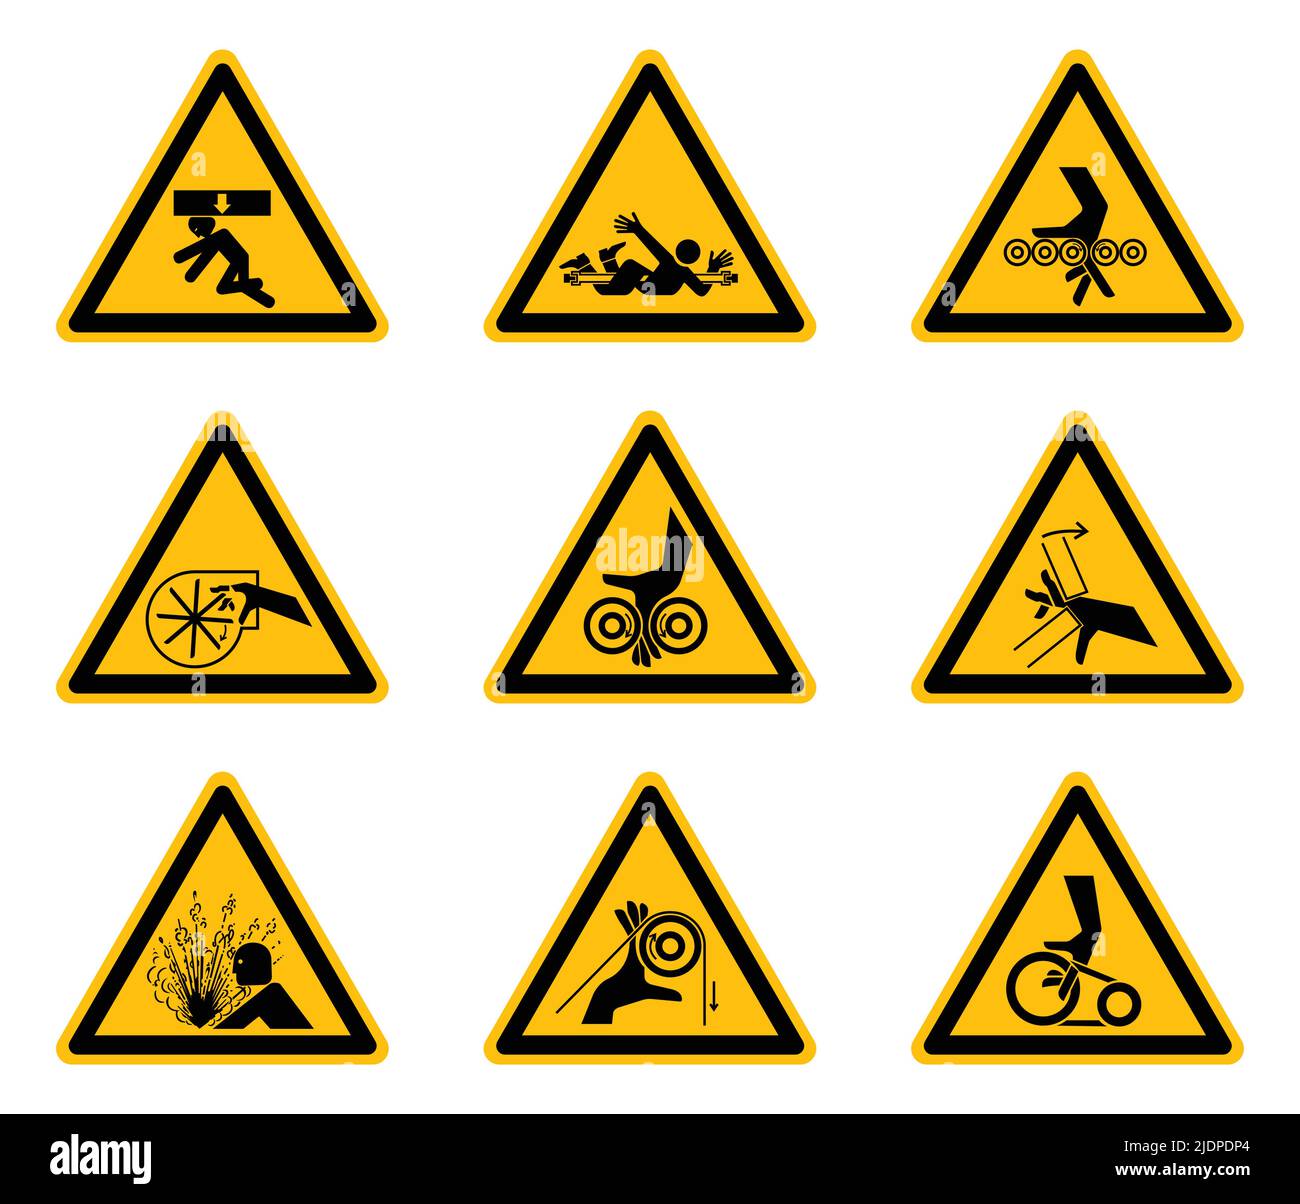 Triangular Warning Hazard Symbols labels On White Background,Vector ...